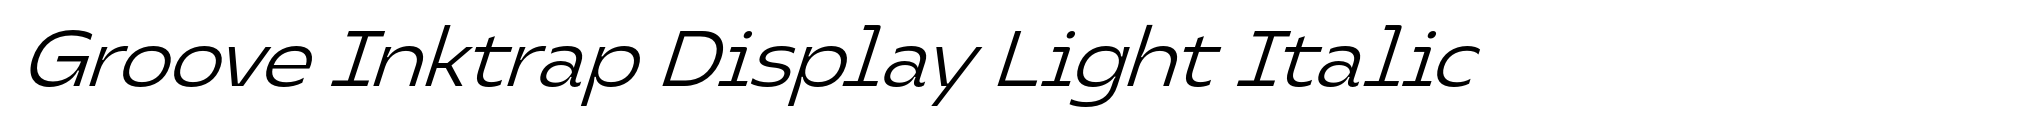 Groove Inktrap Display Light Italic image